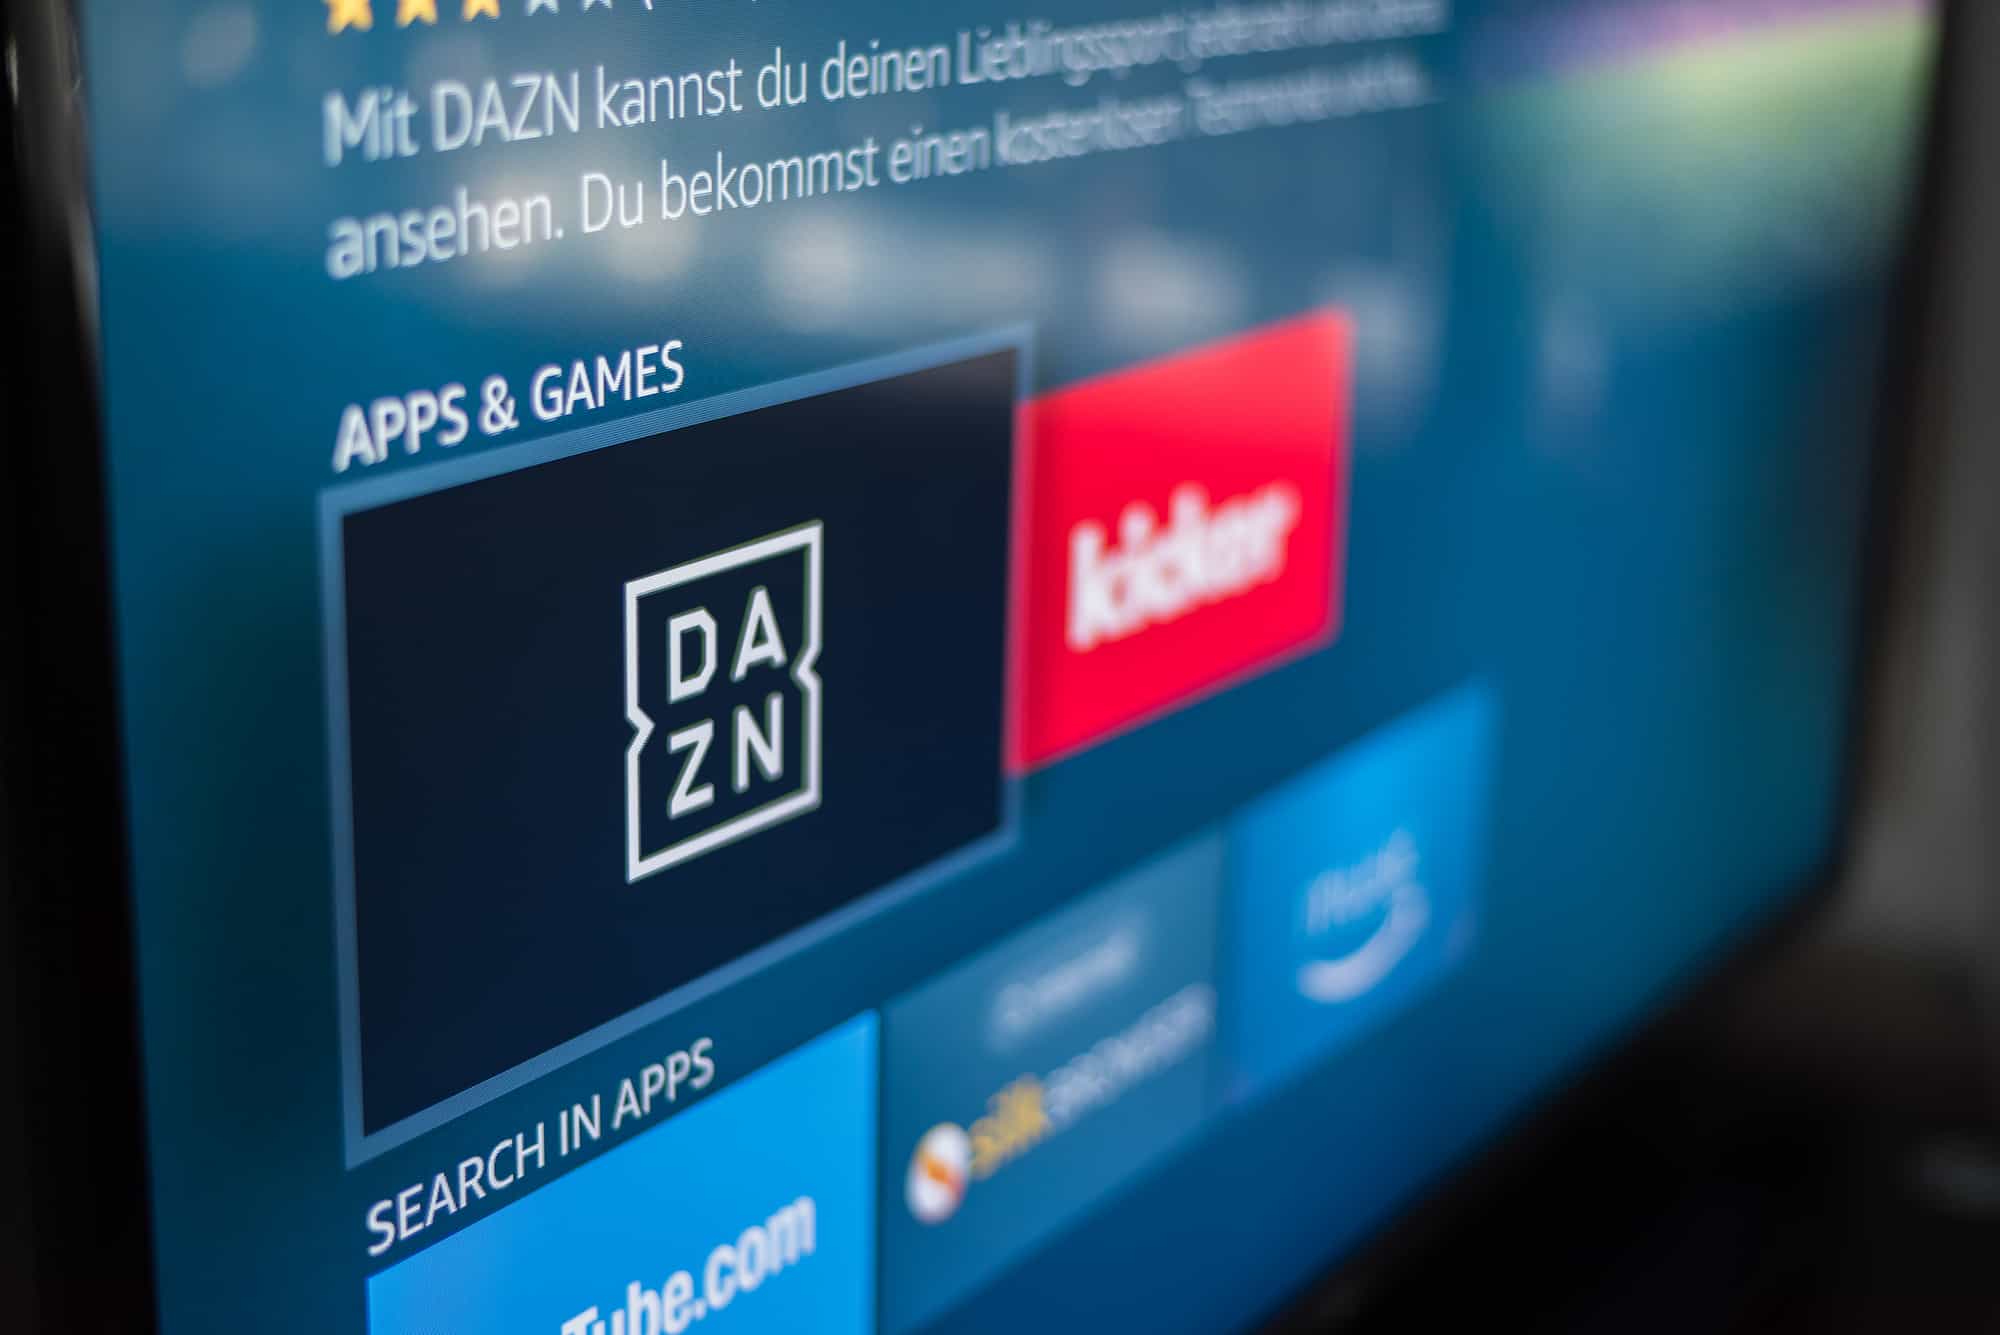 Dazn App on TV